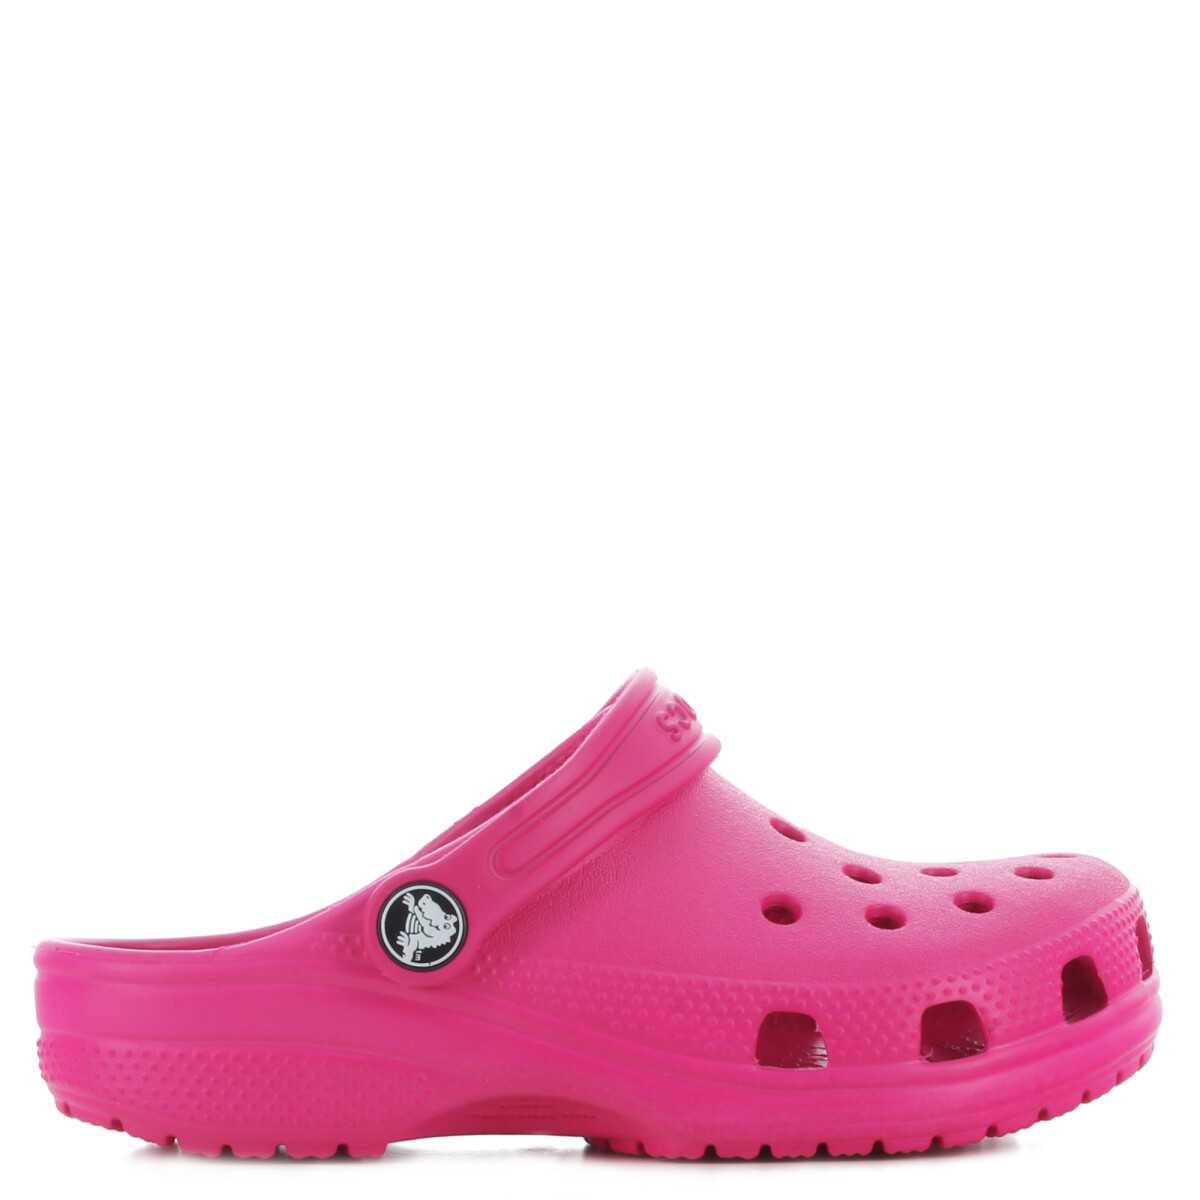 Zueco Classics Clog Kids Crocs - Candy/Pink 